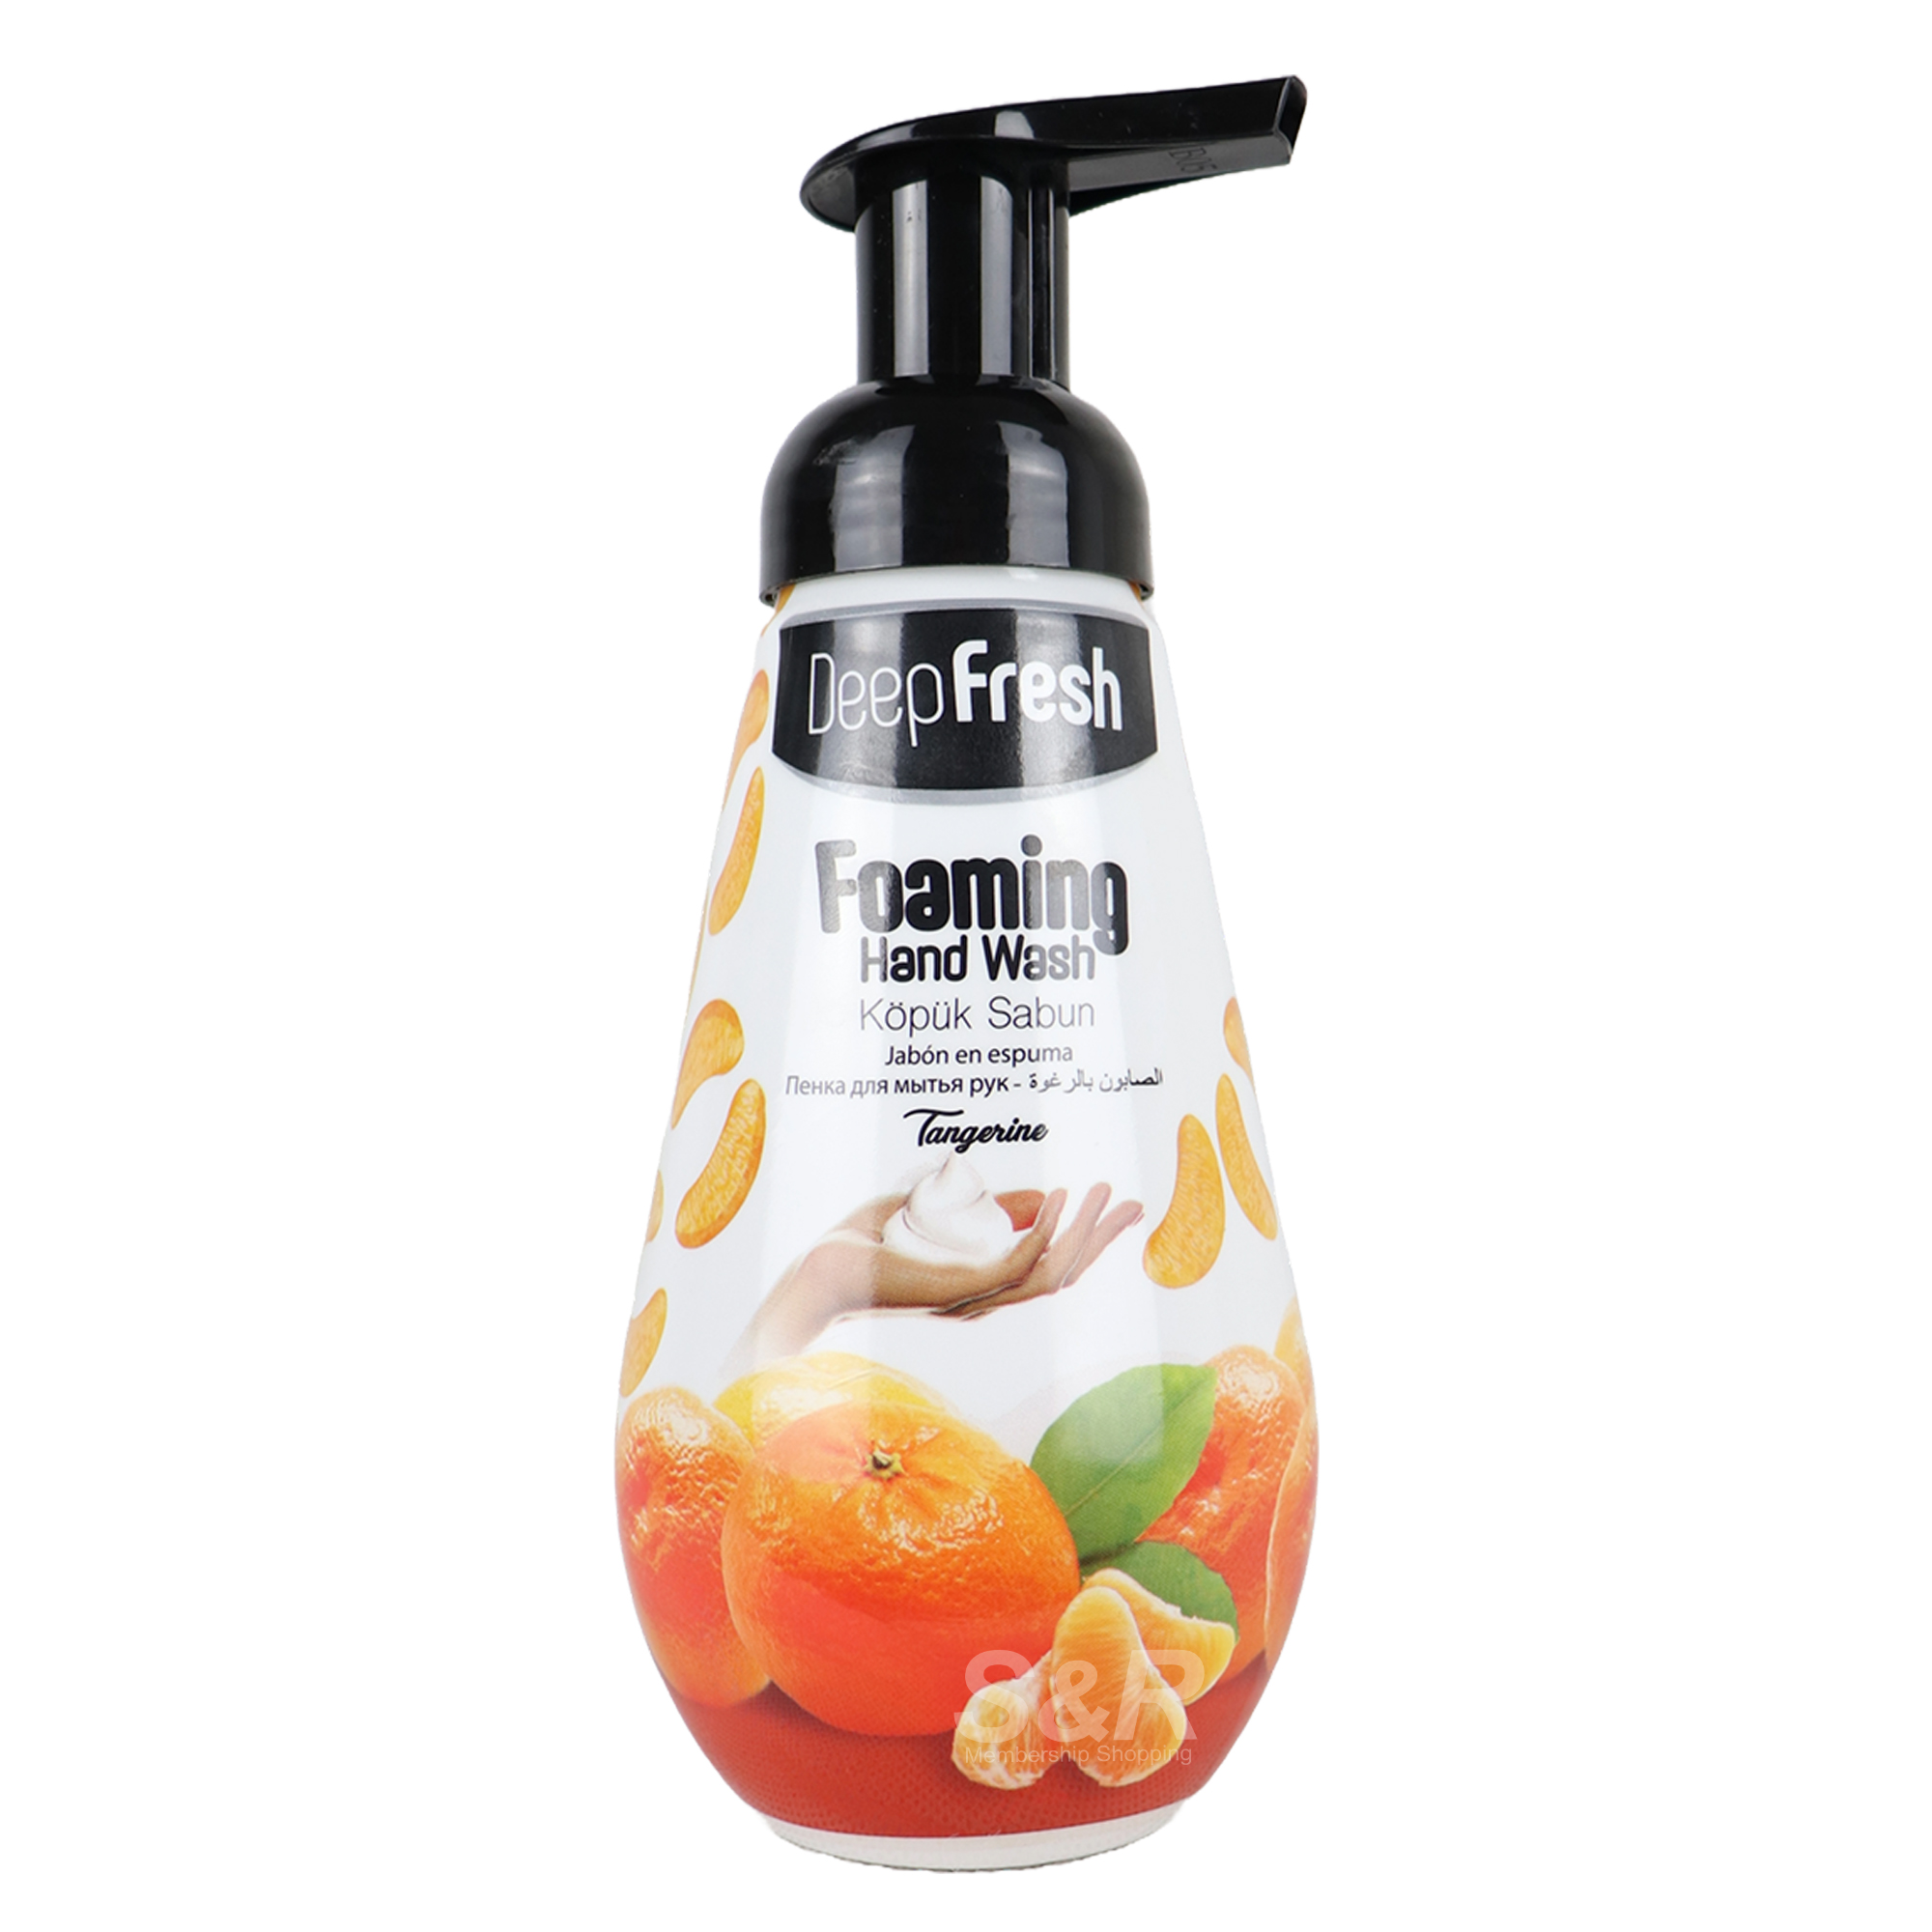 Deep Fresh Foaming Hand Wash Tangerine 400mL